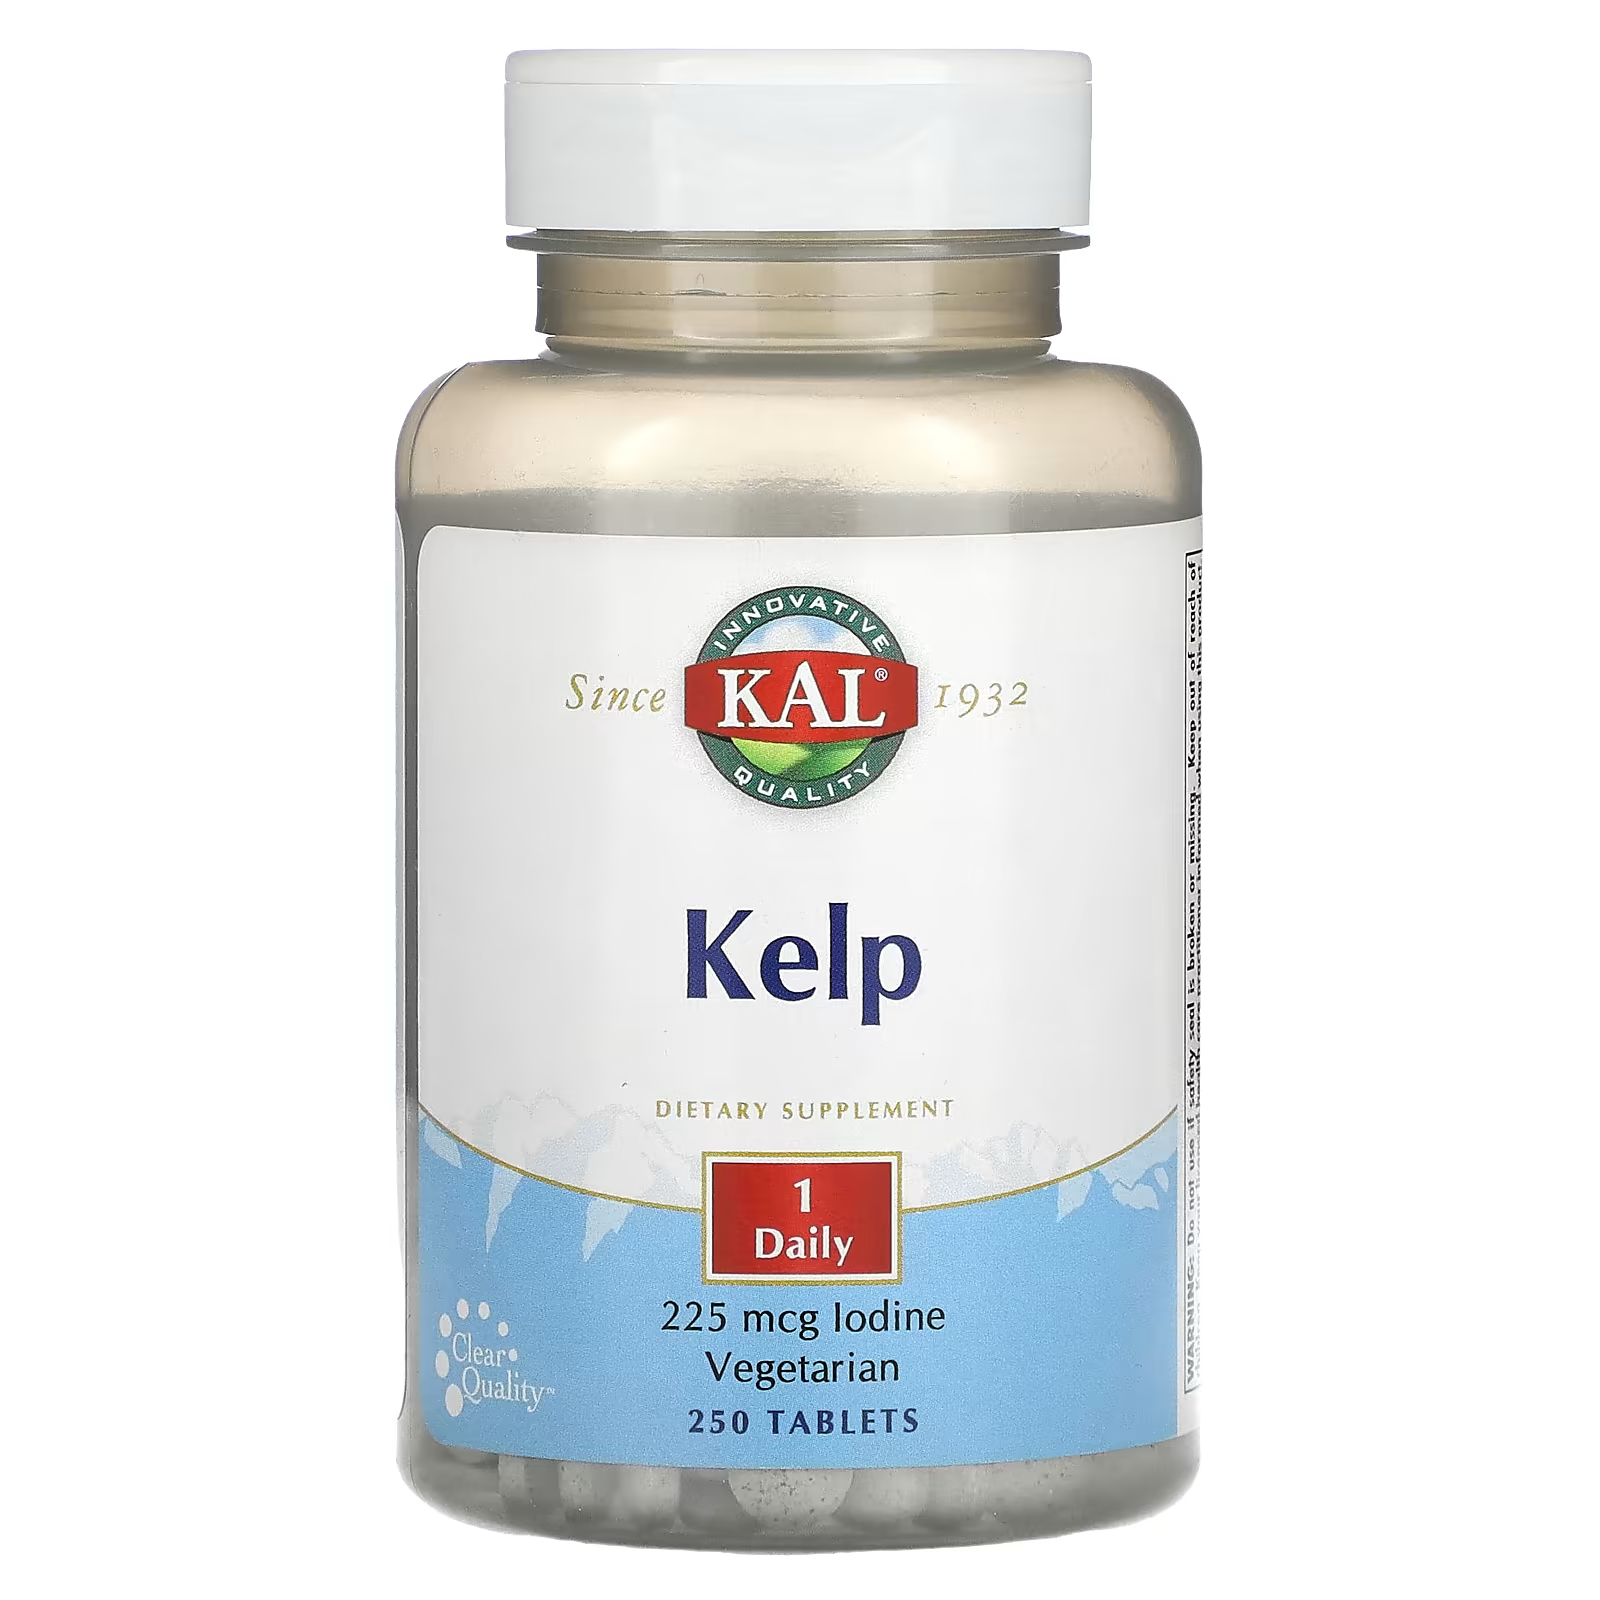 Пищевая добавка Kal келп, 250 таблеток пищевая добавка kal костная мука 250 таблеток